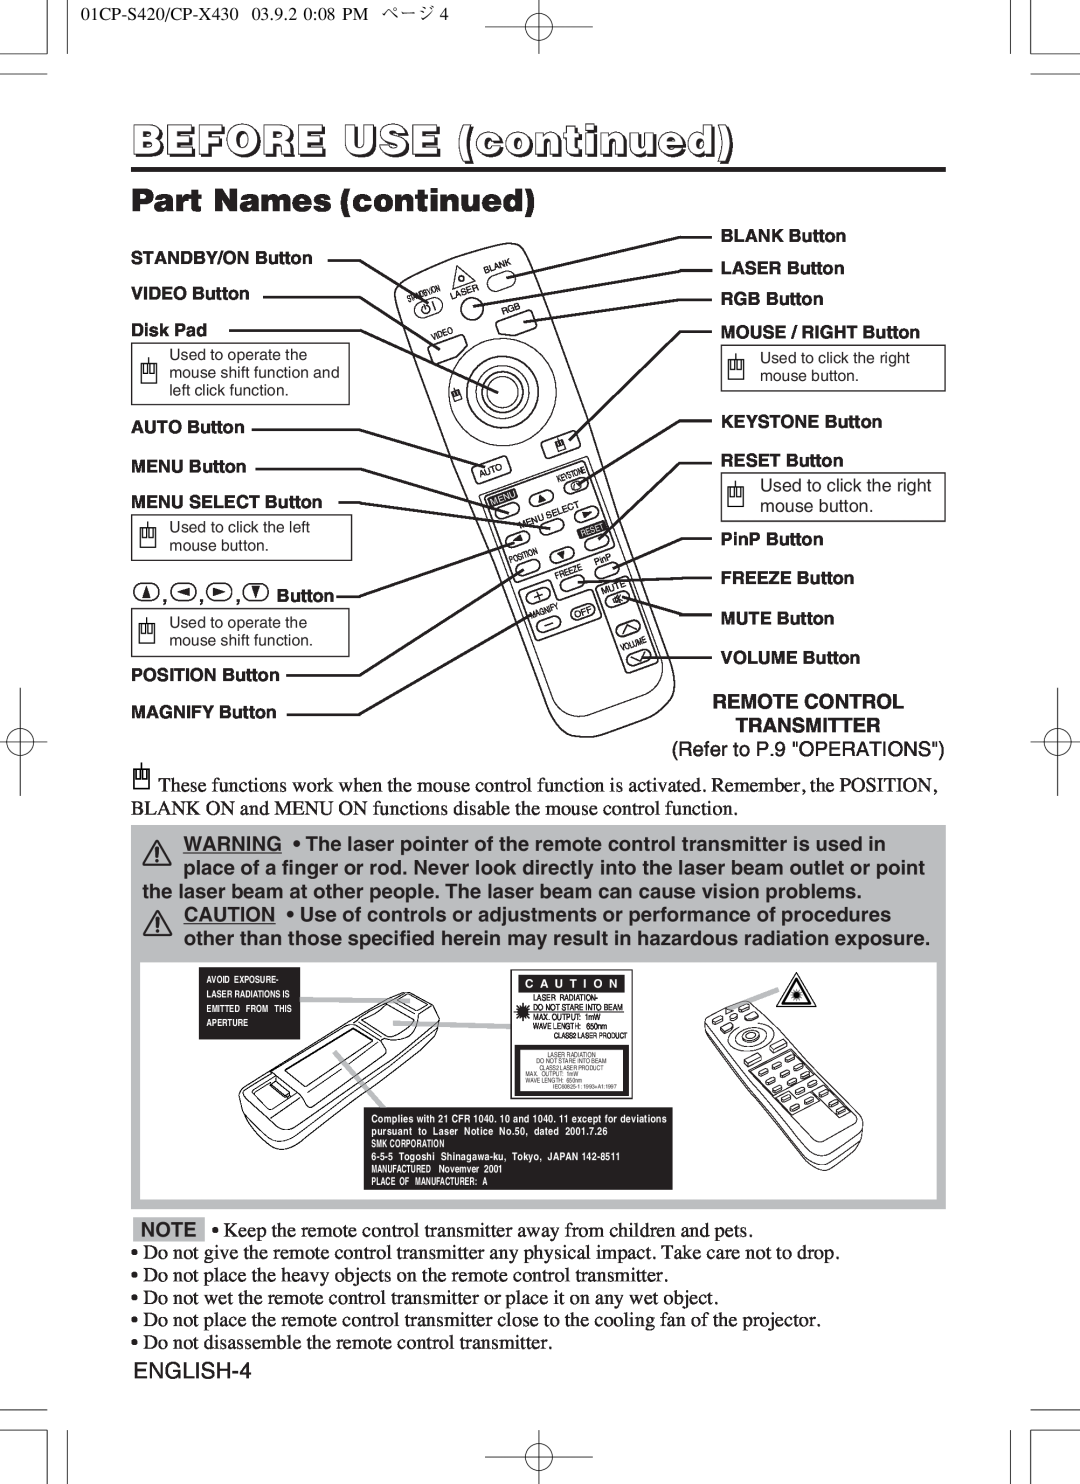 Hitachi CP-X430WA, CP-S420WA user manual Part Names continued, BEFORE USE continued, ENGLISH-4 